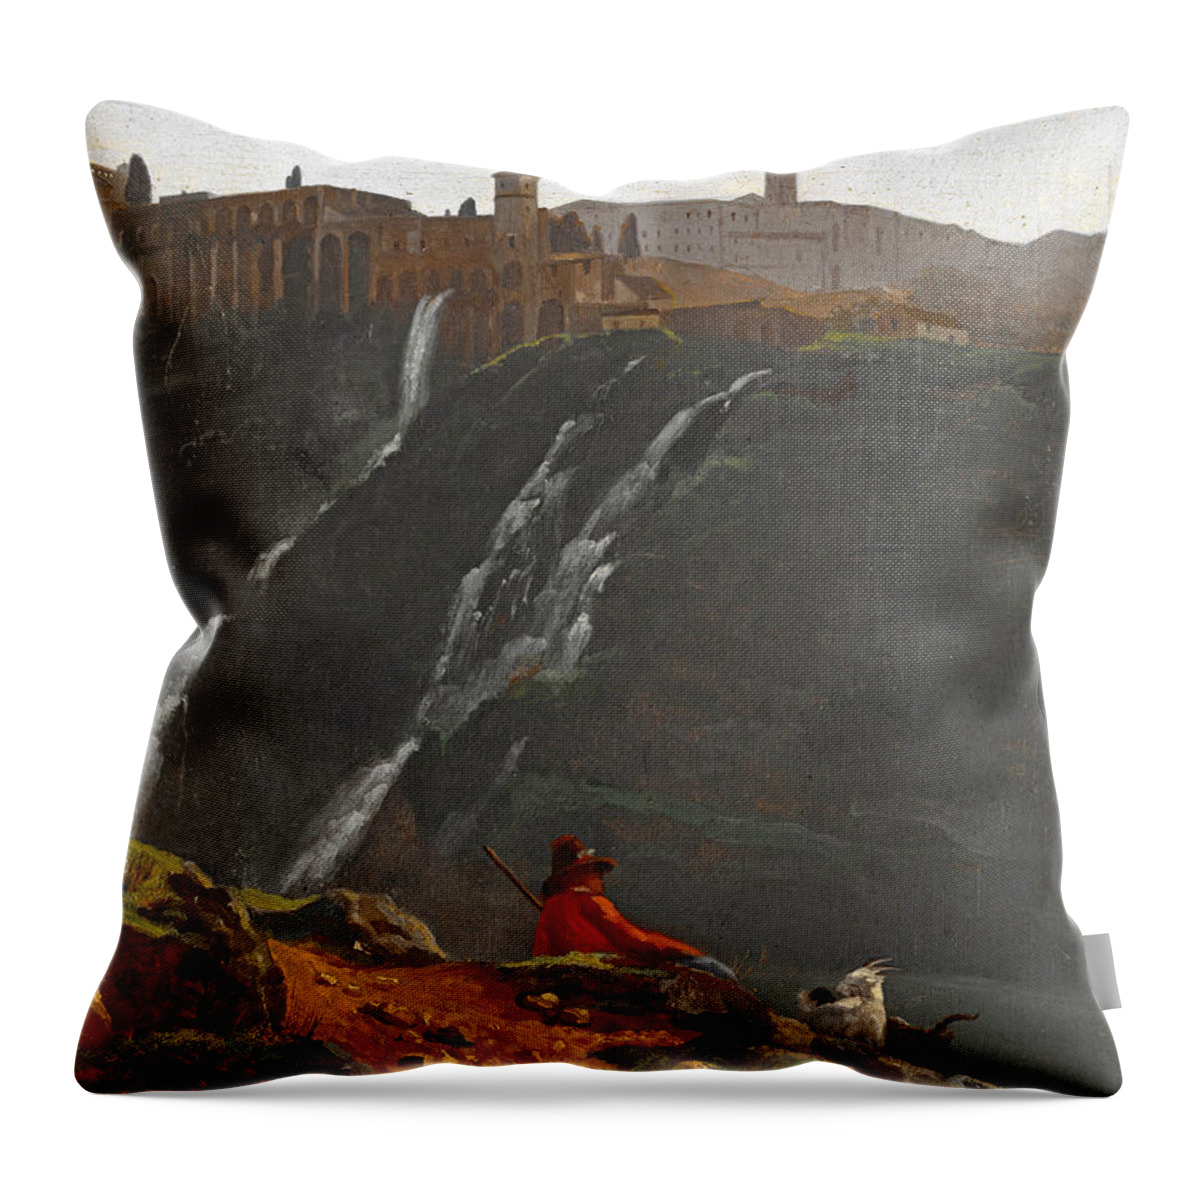 Achille Etna Michallon Throw Pillow featuring the painting Goatherd Opposite the Falls of Tivoli by Achille Etna Michallon